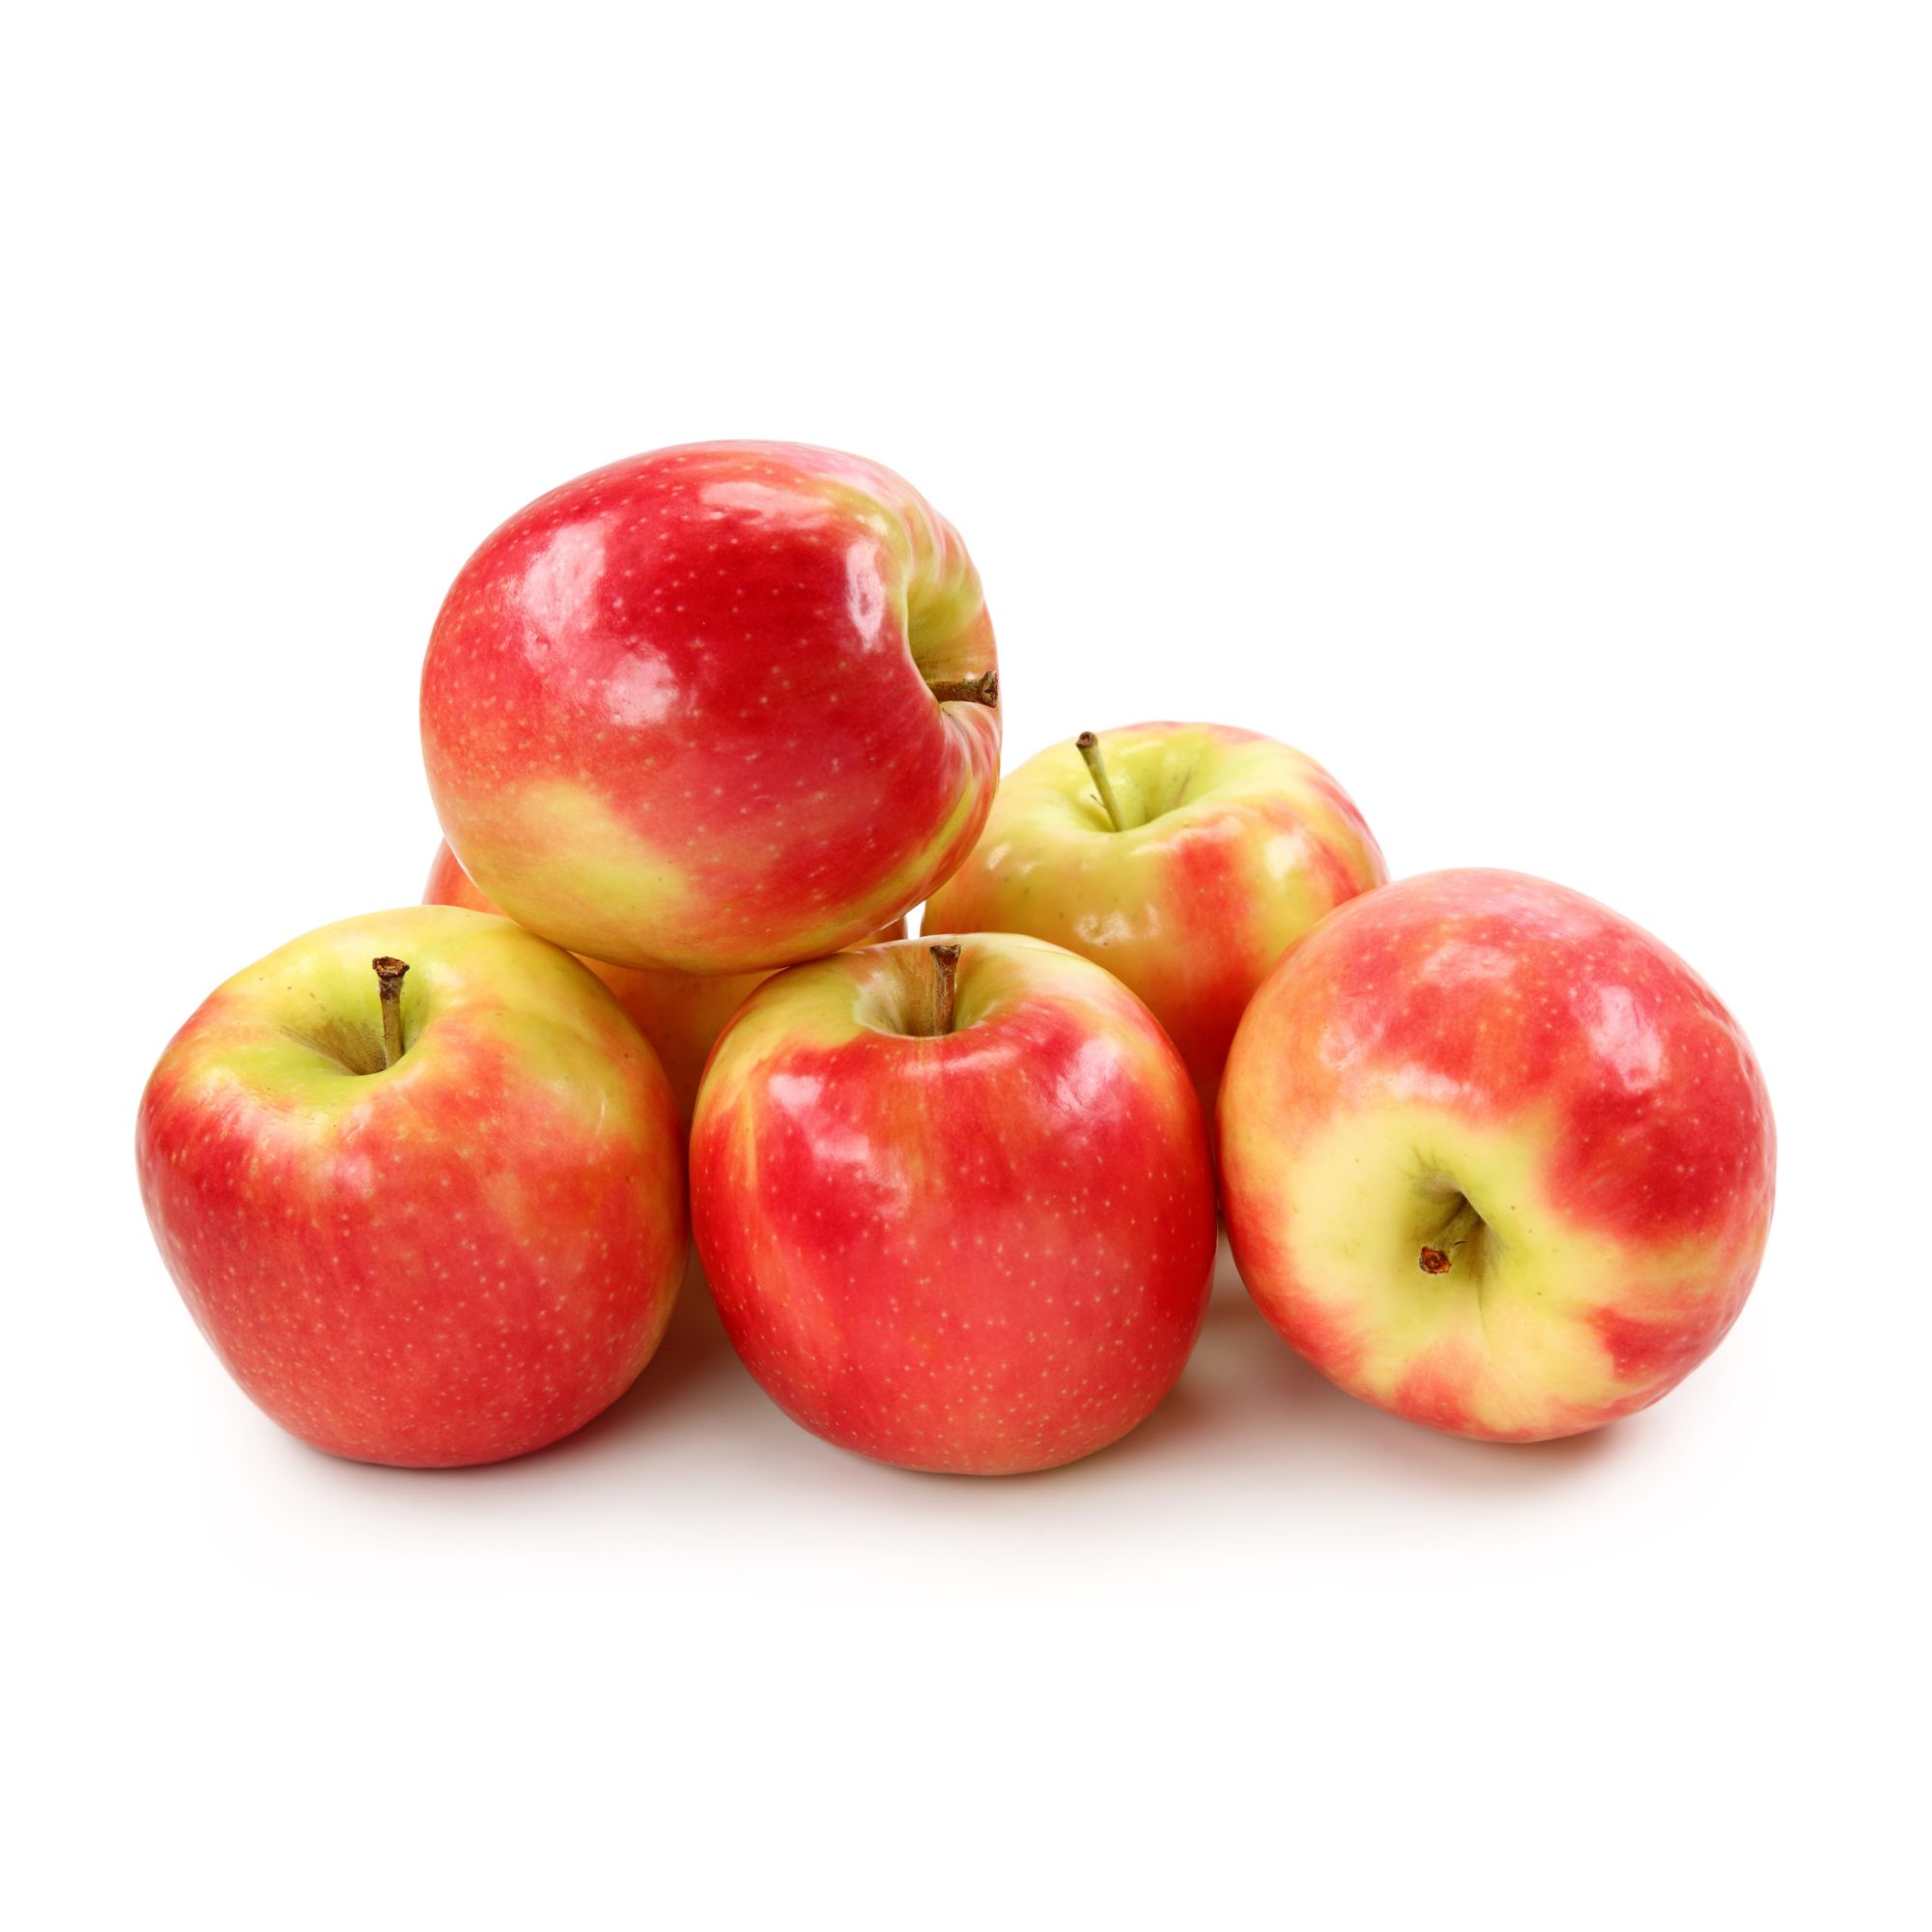 Organic Honeycrisp Apples, 4 lbs.